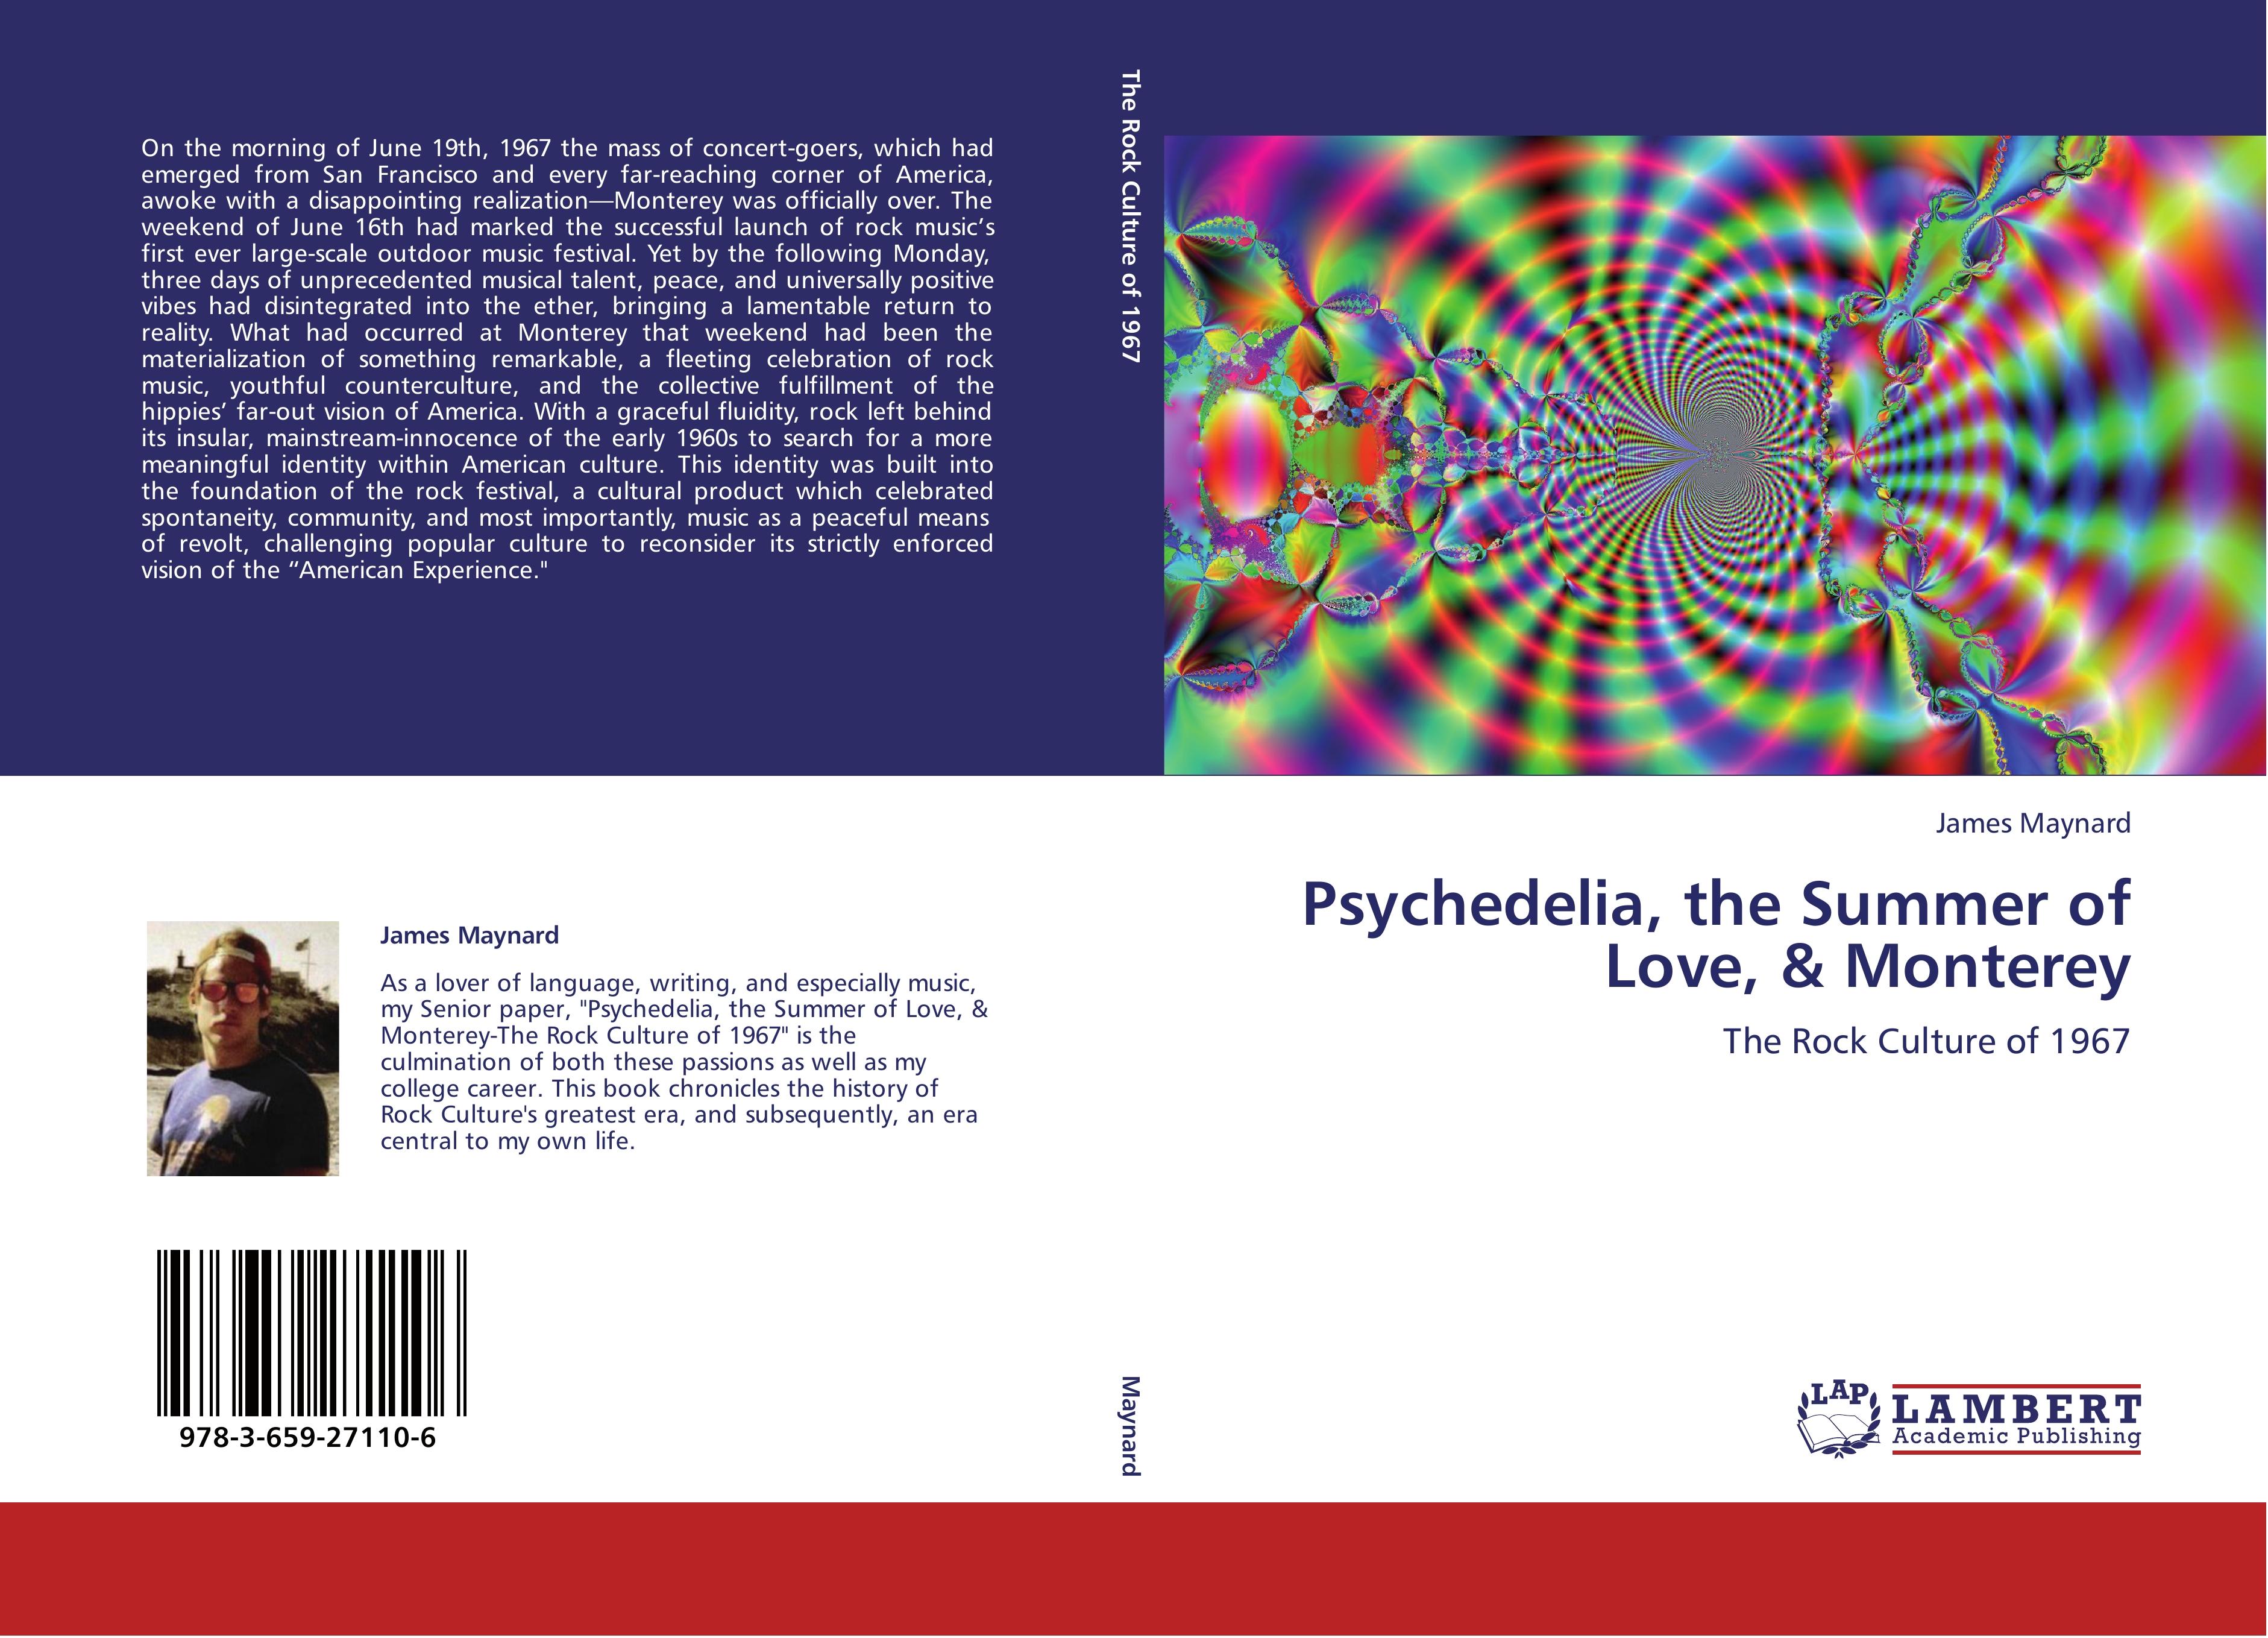 Psychedelia, the Summer of Love, & Monterey - James Maynard